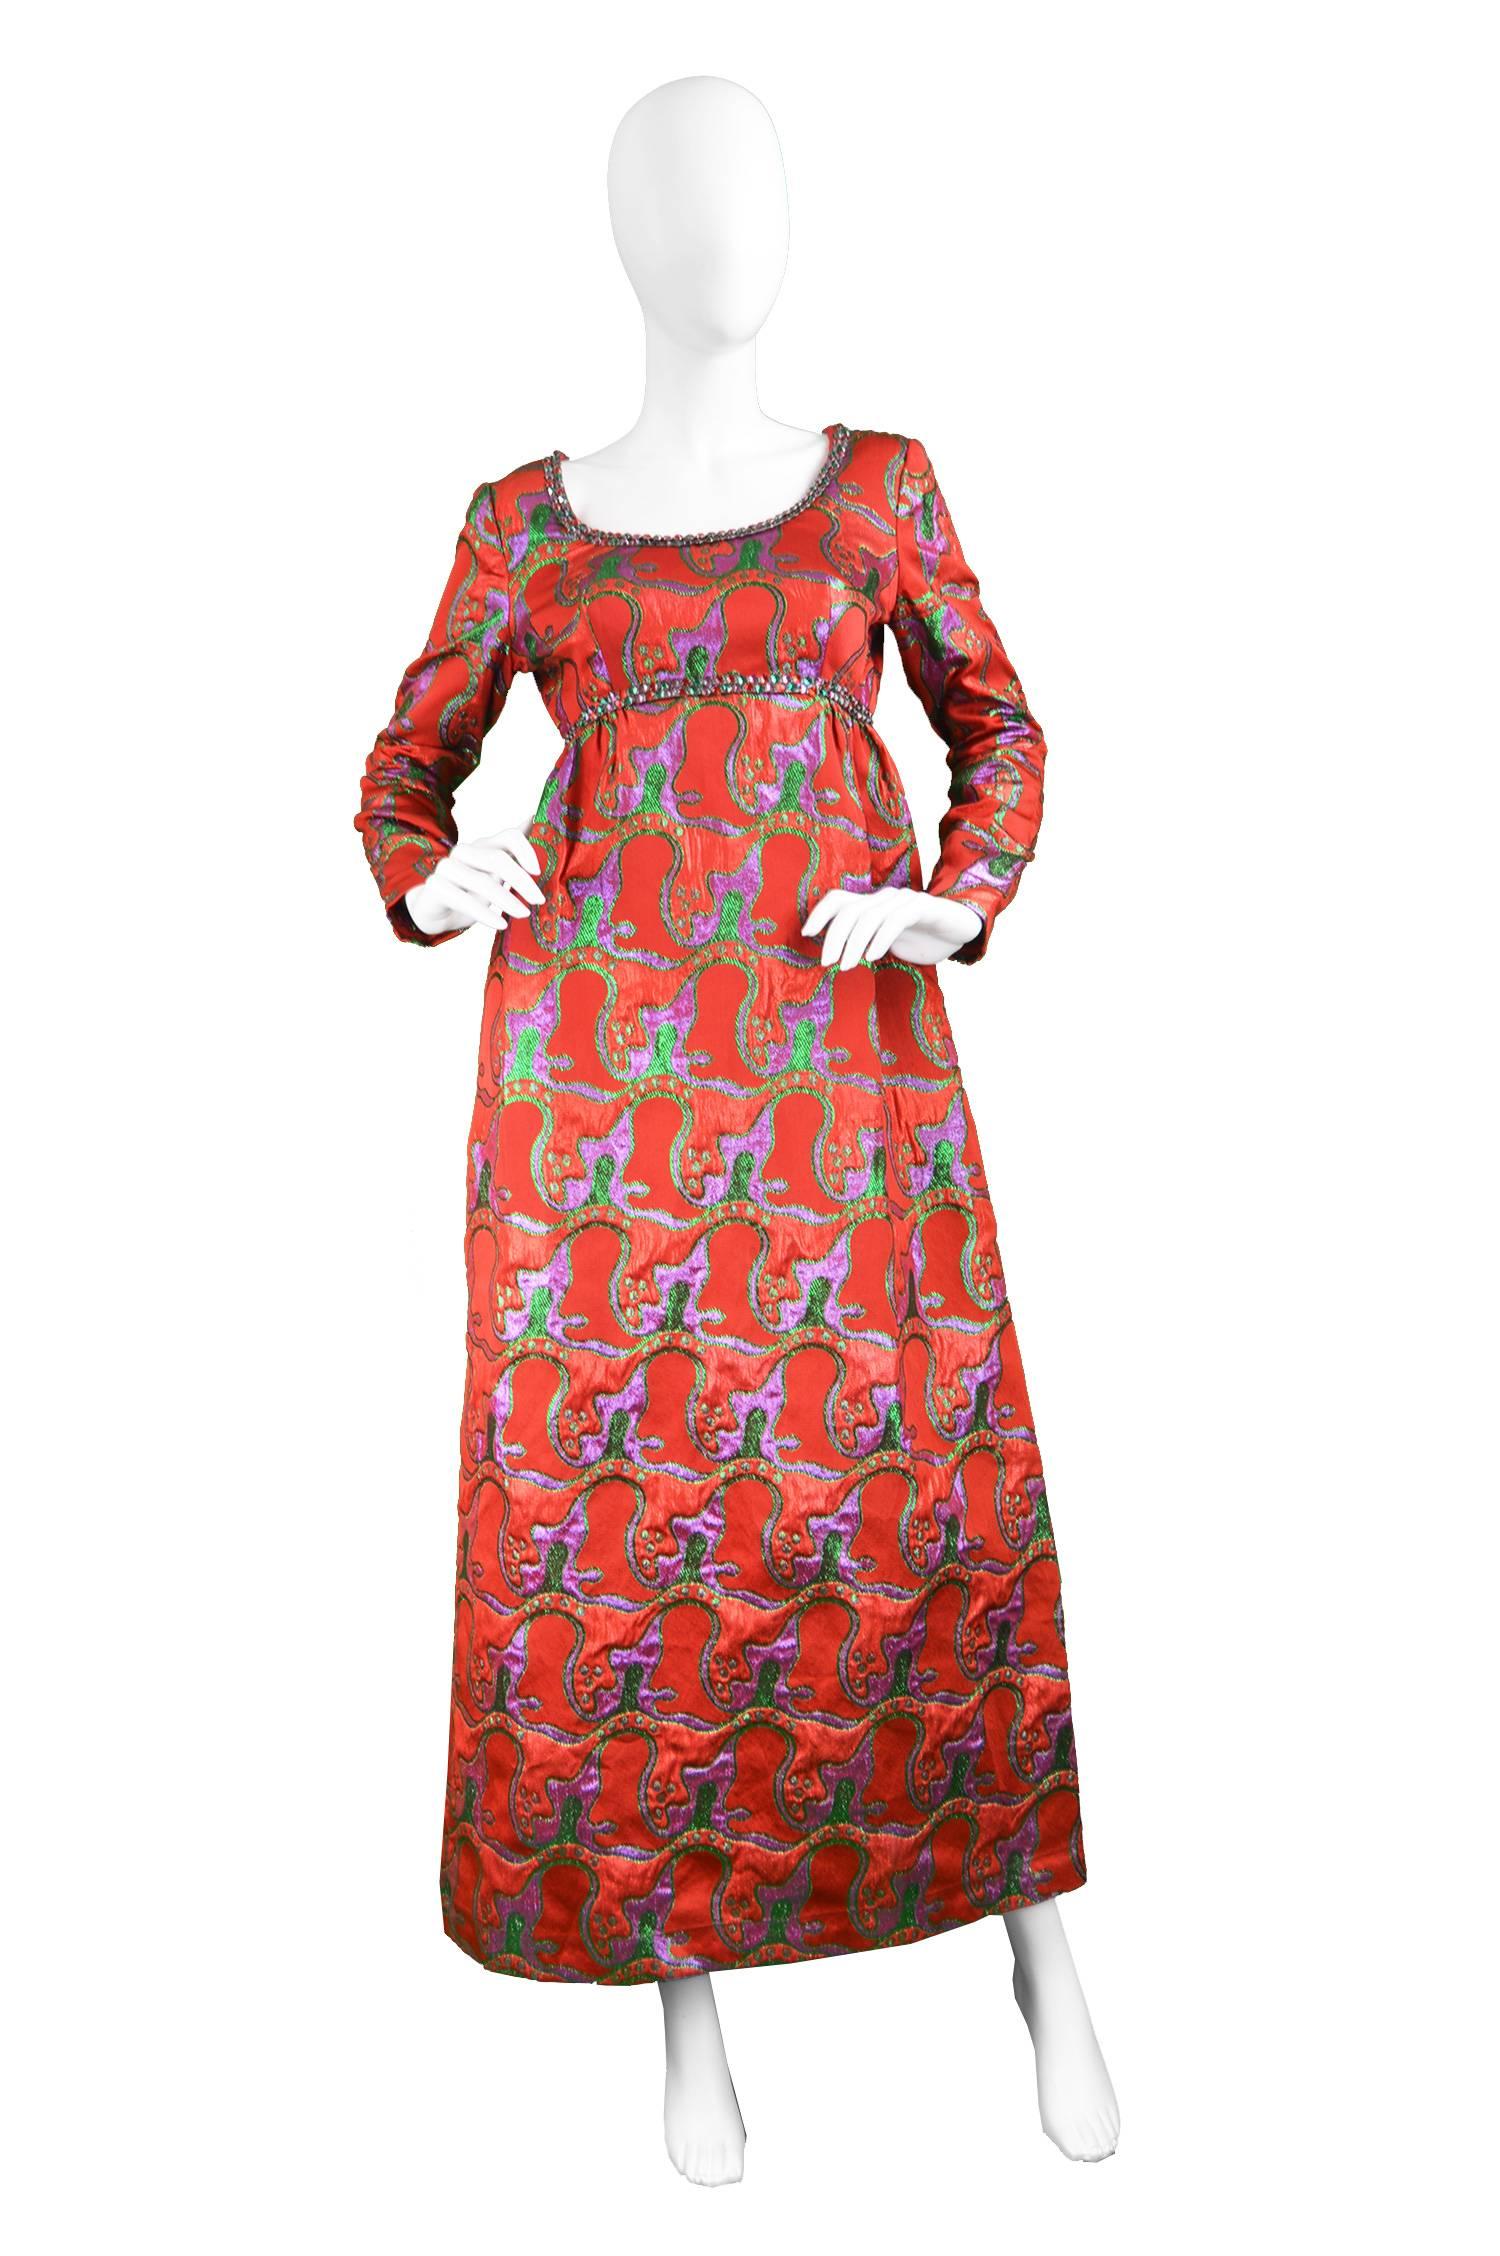 Victor Costa Romantica Red, Purple & Green Metallic Brocade Evening Dress, 1970s For Sale 1